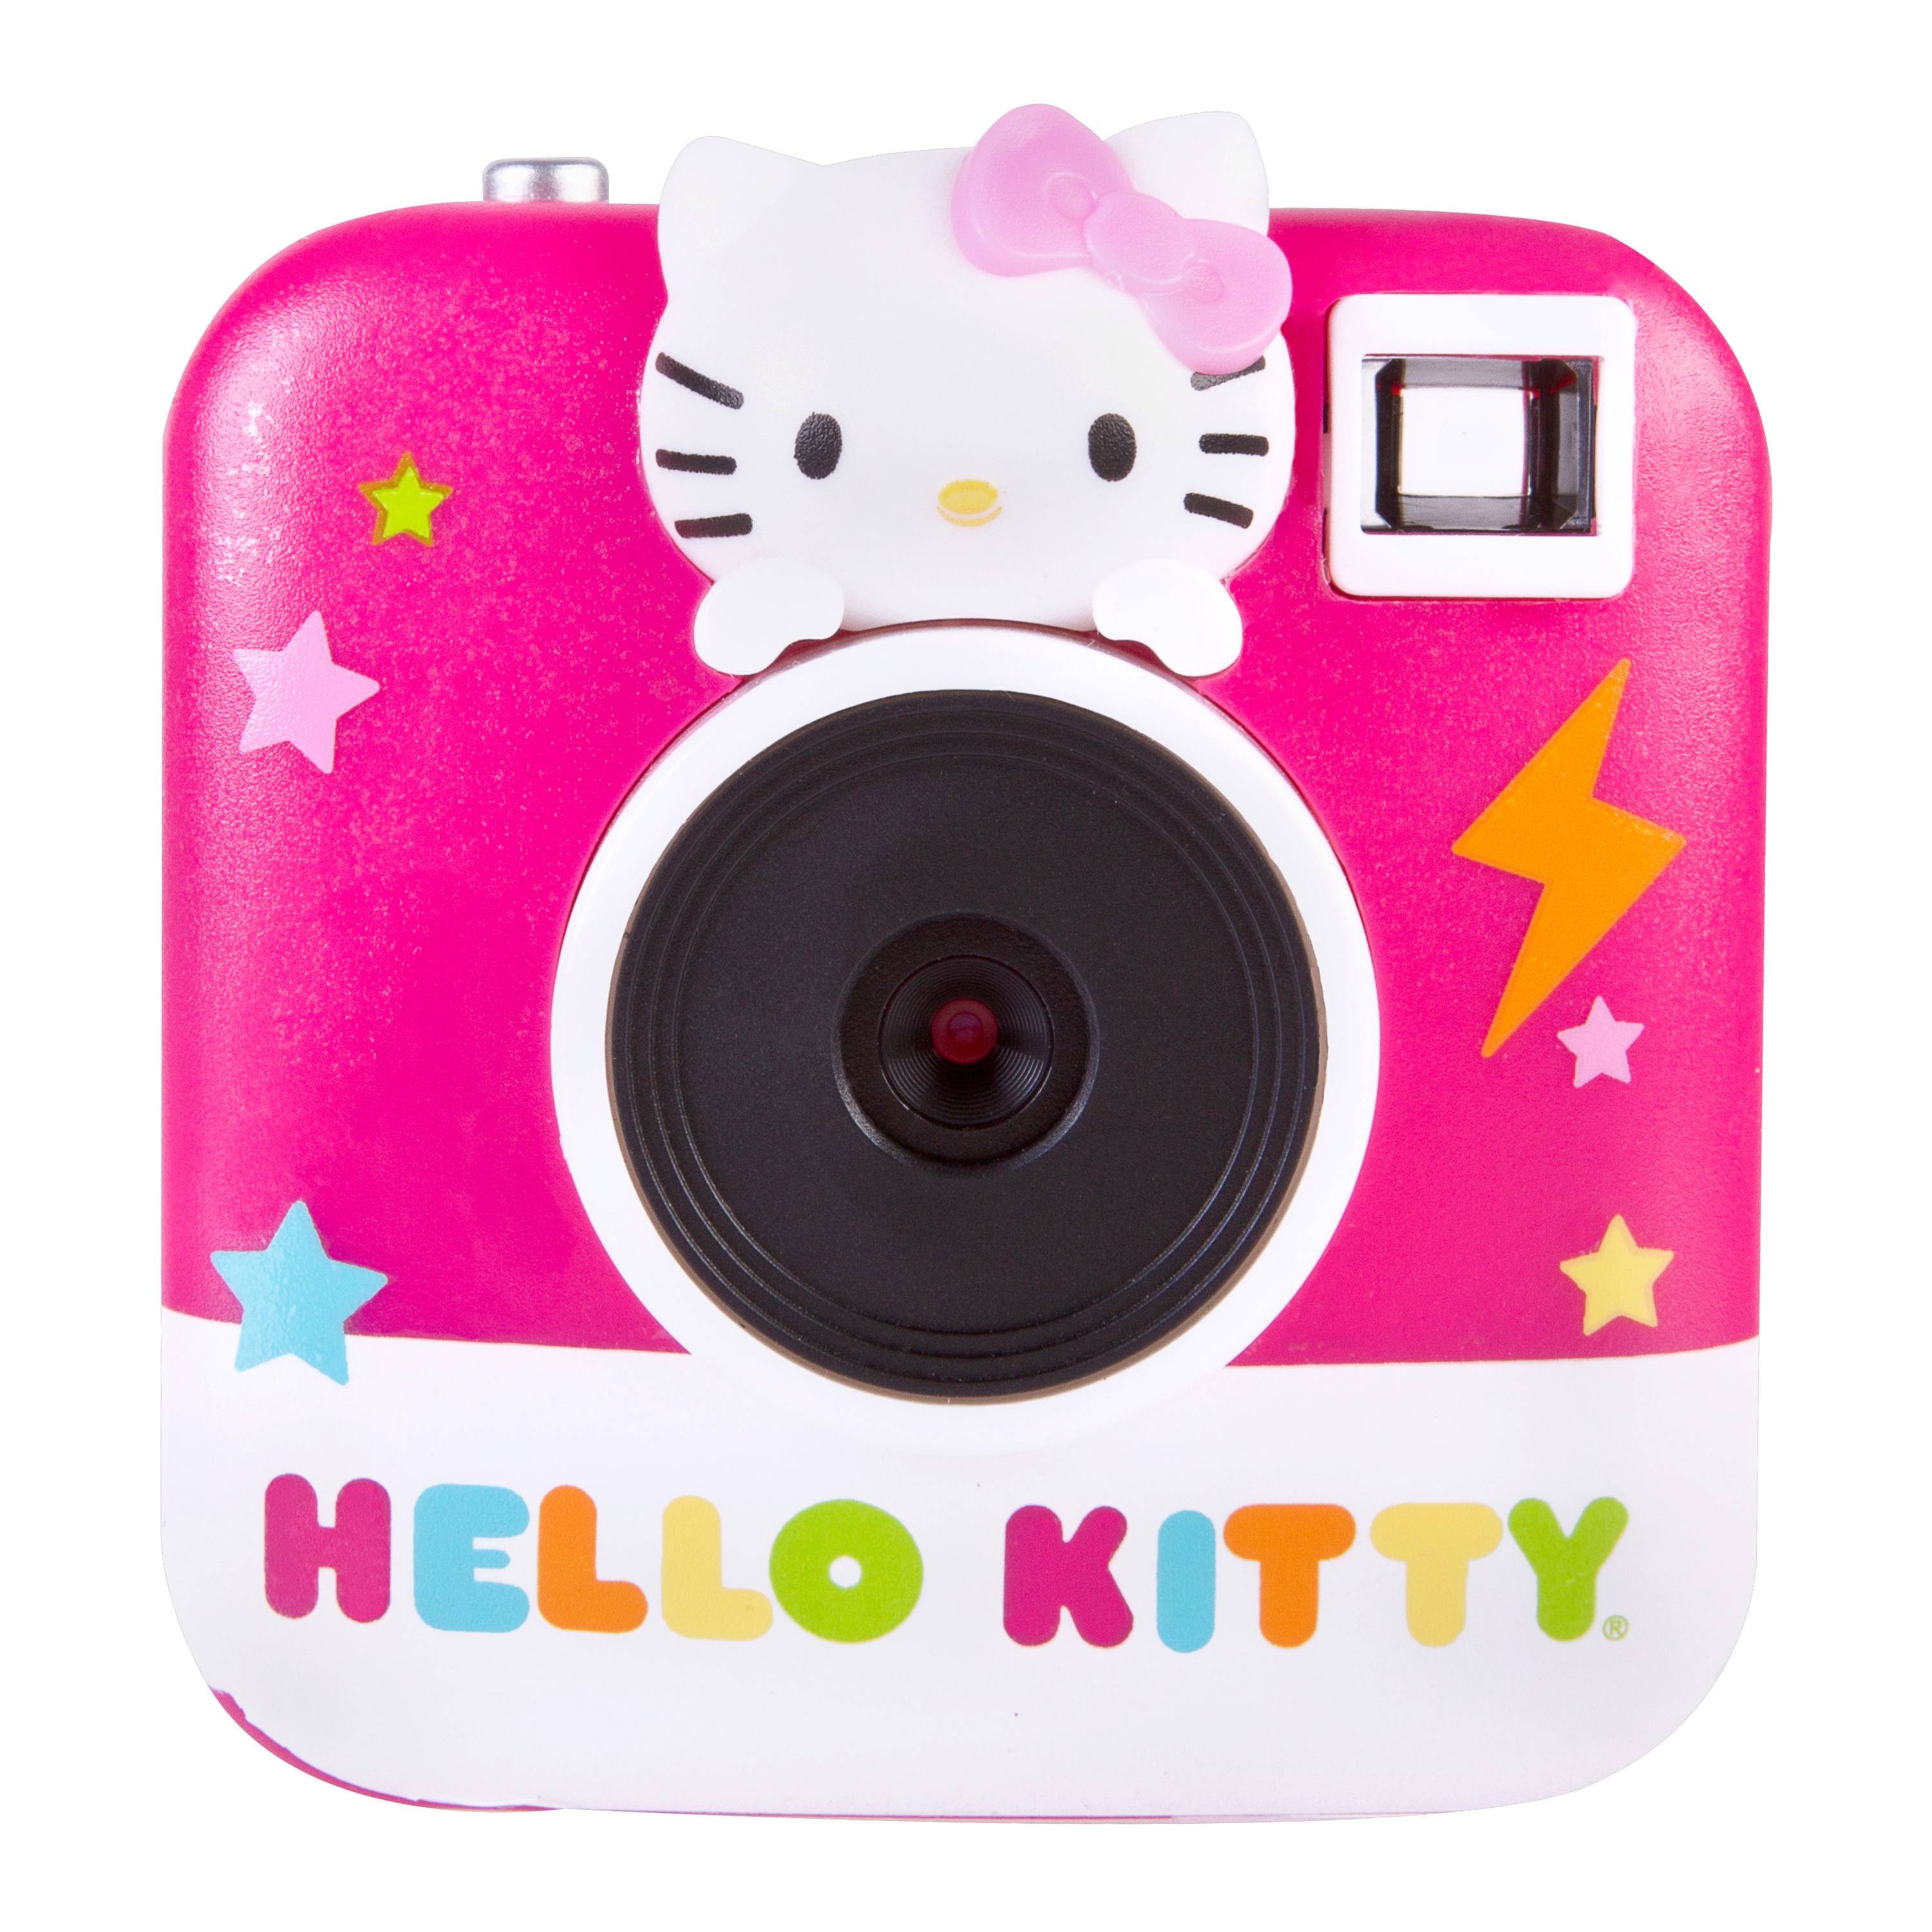 Hello камера. Фотоаппарат Хелло Китти. Детский фотоаппарат hello Kitty. Хеллоу Китти с фотоаппаратом. Фотоаппарат розовый hello Kitty.